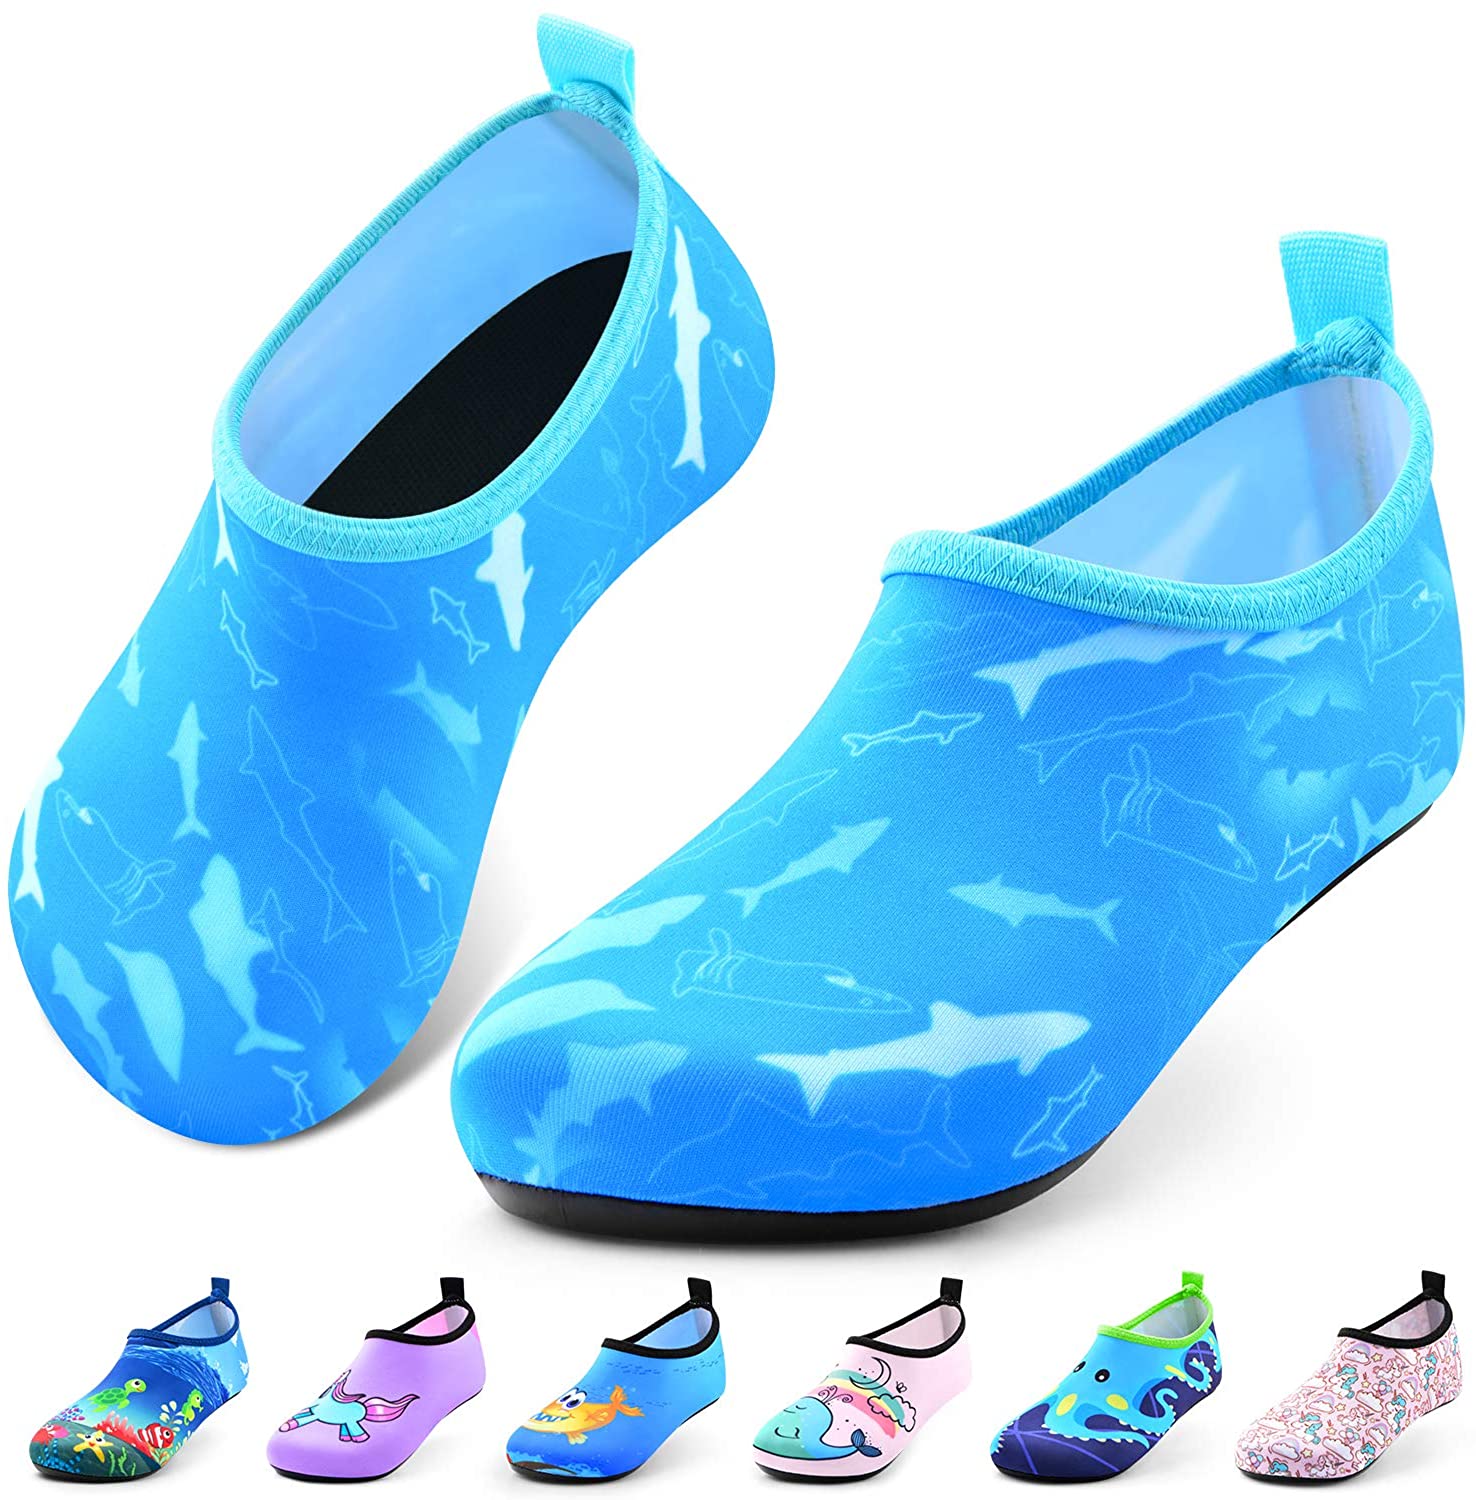 WXDZ Boys Girls Water Shoes Swim Shoes Quick Drying Barefoot Aqua Socks for Kids Beach Pool 